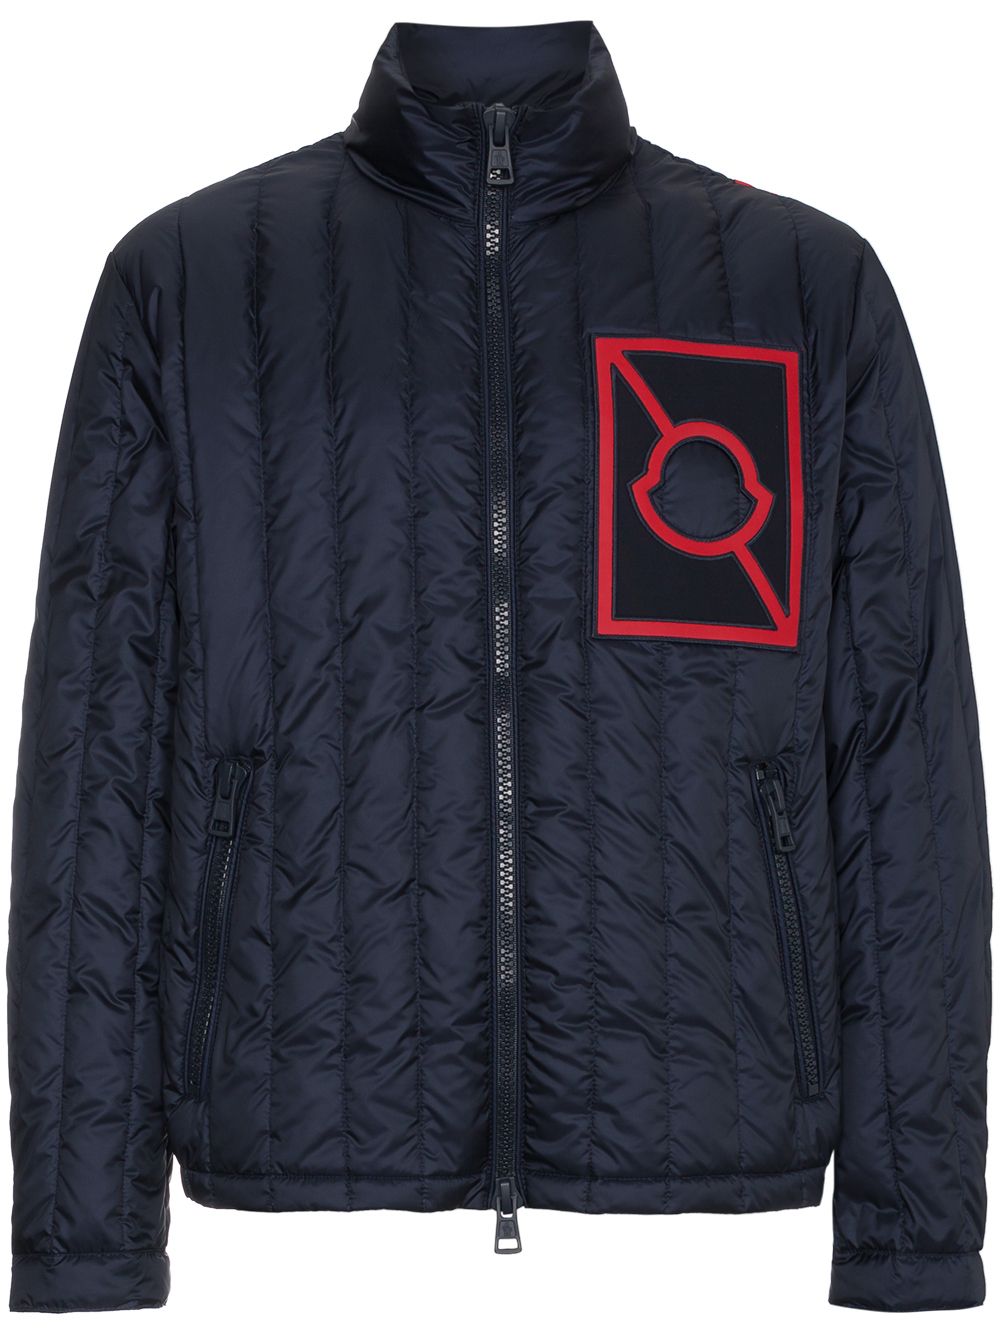 Moncler Moncler x Craig Green jacket with logo back SS18 - Shop Online ...